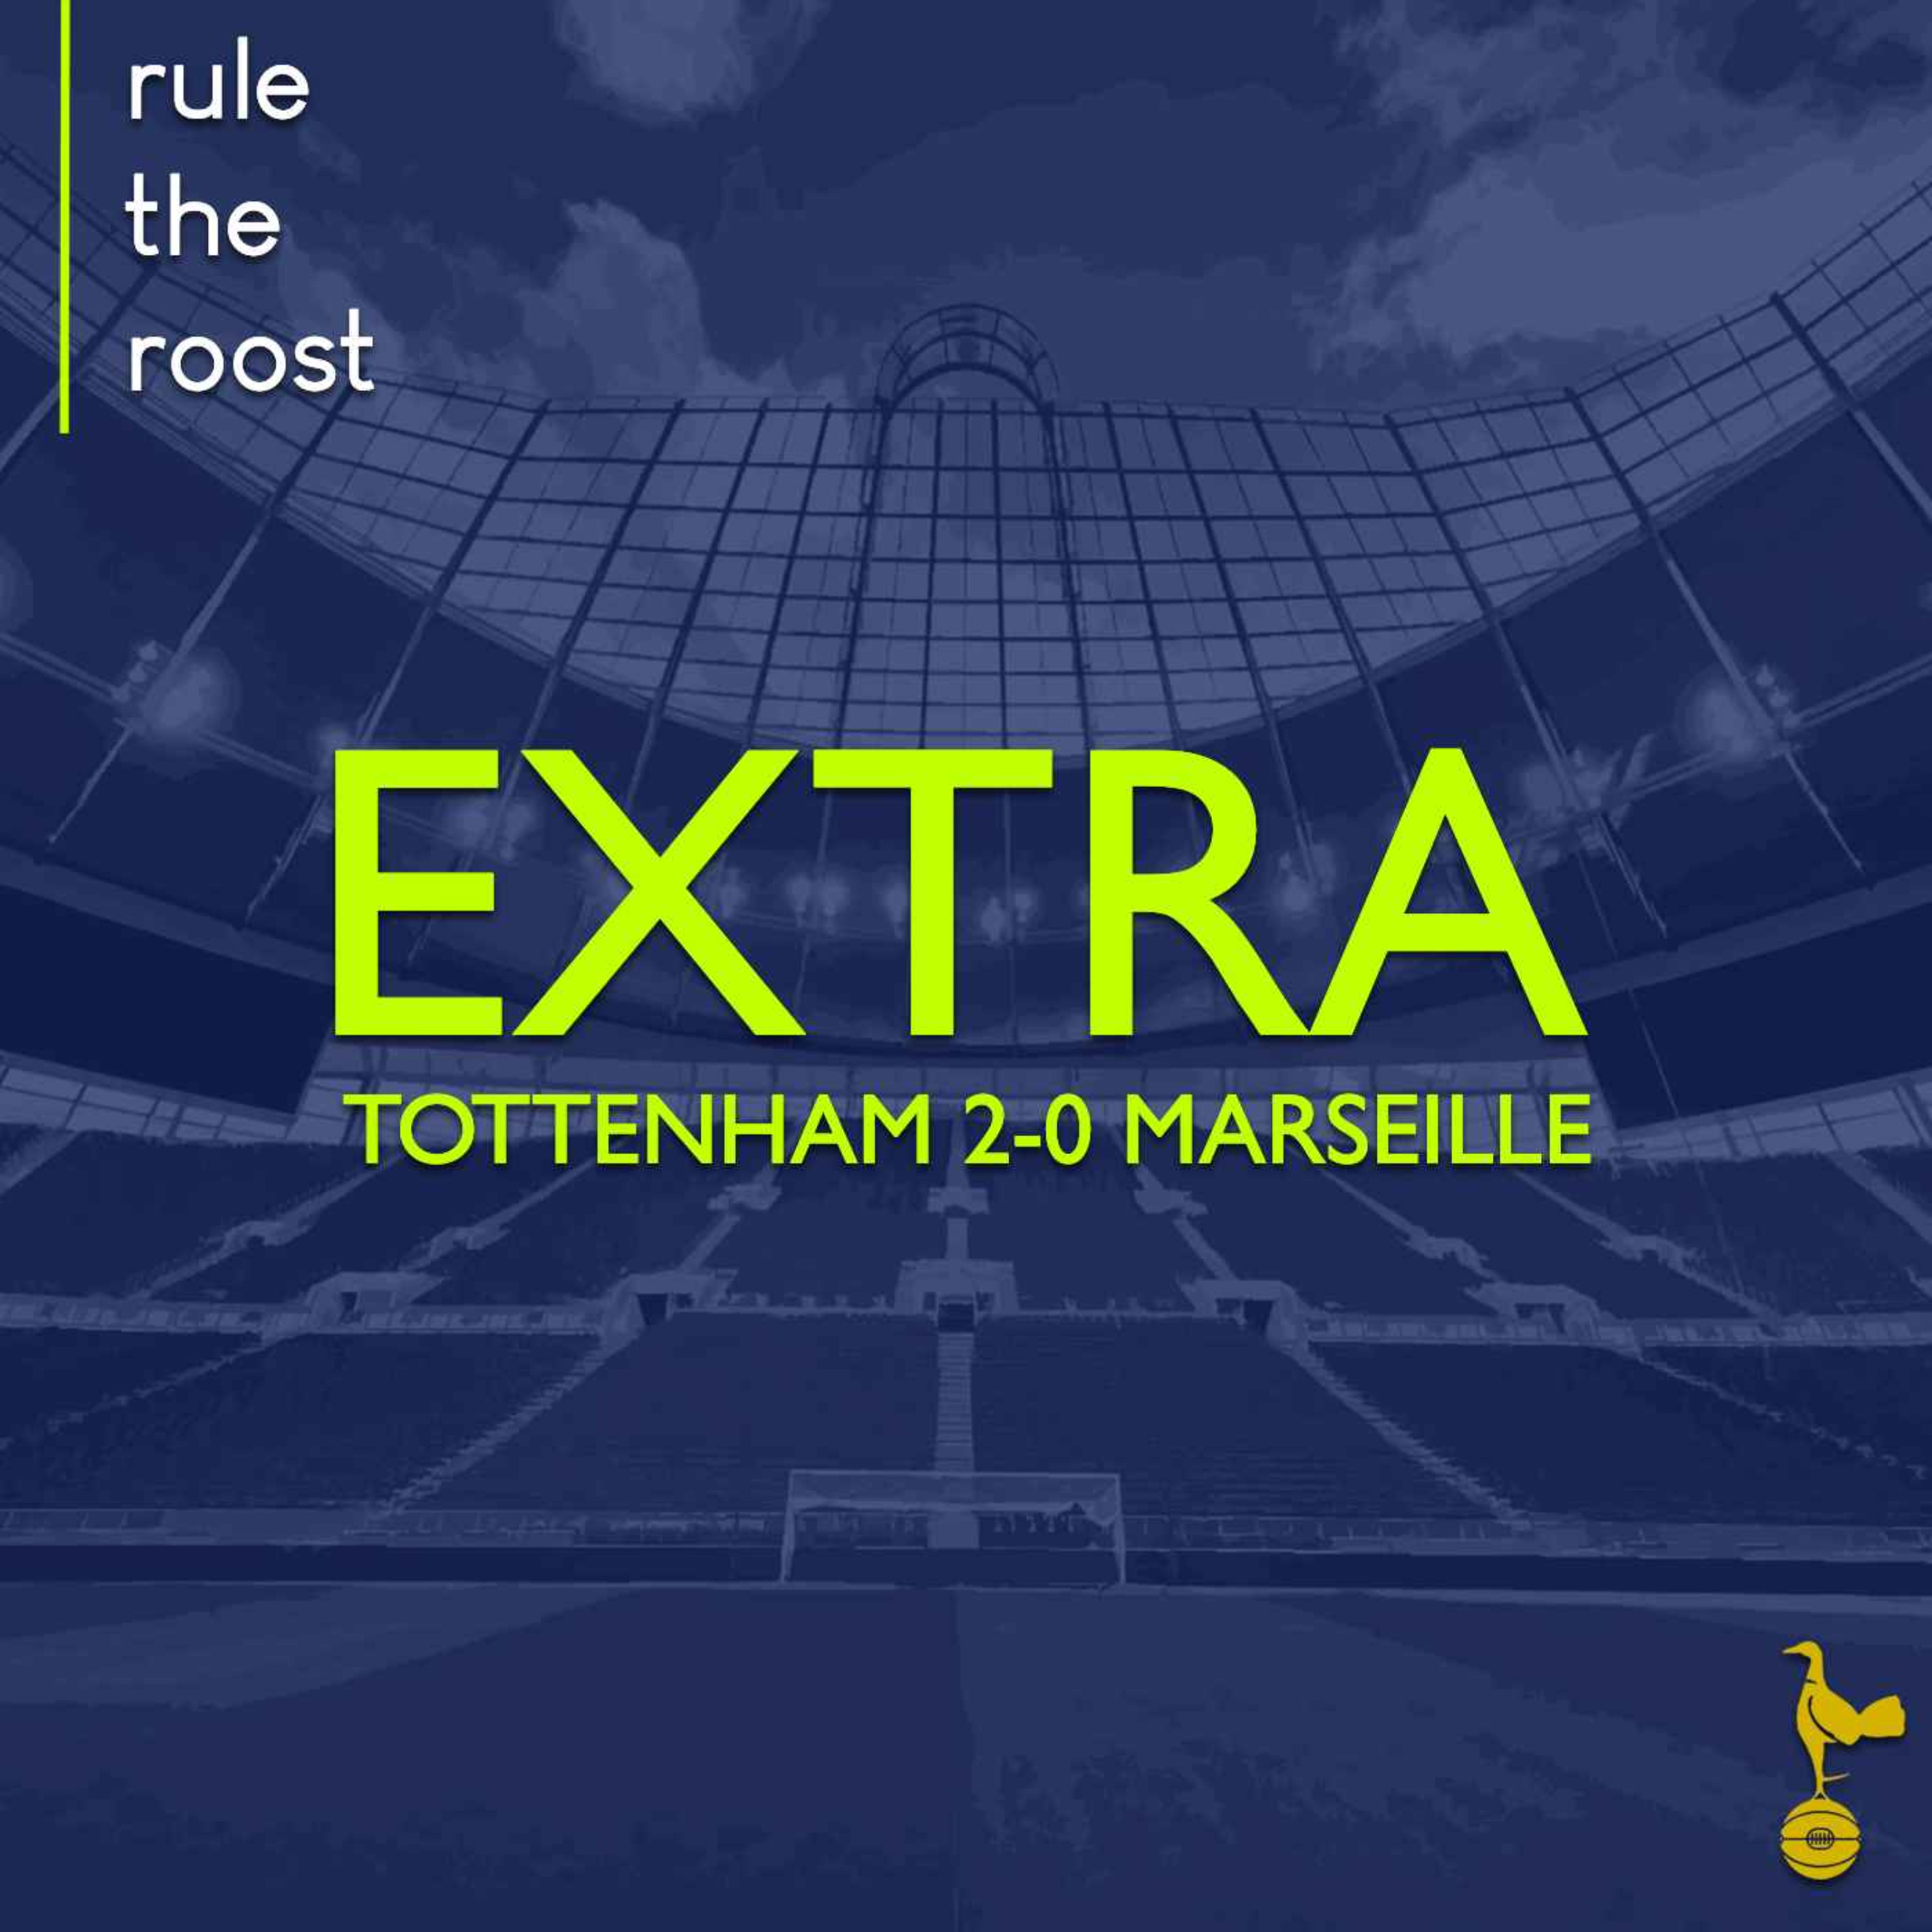 RTR EXTRA: Tottenham 2-0 Marseille